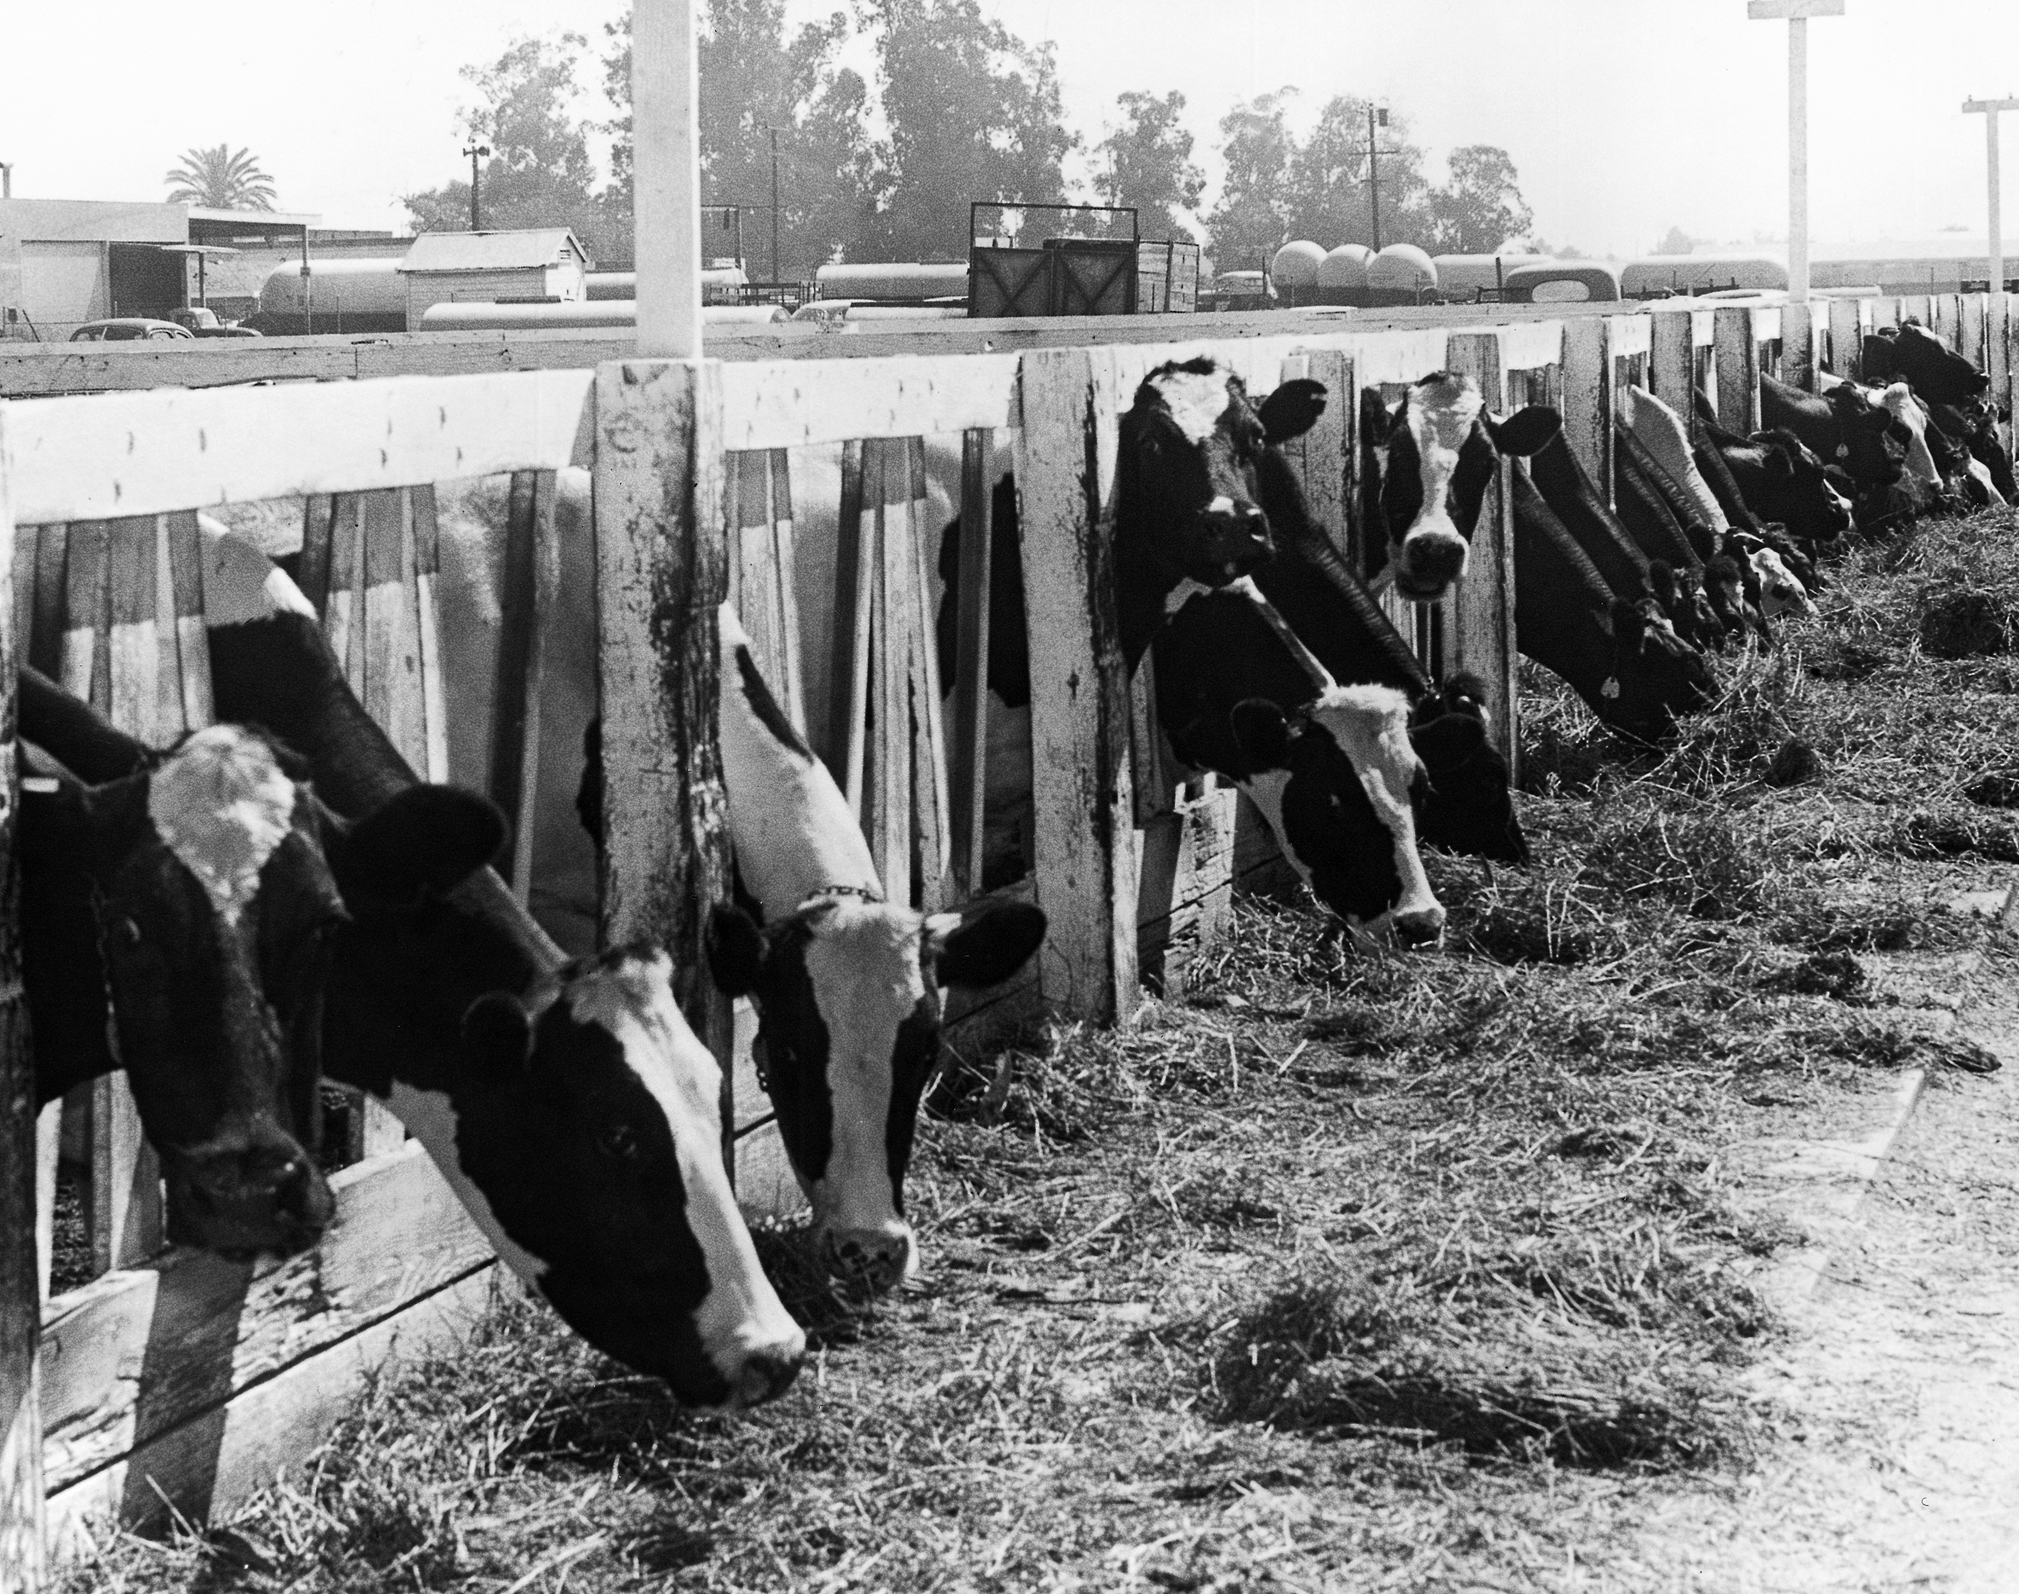 Photo of cows taken in September 1959.